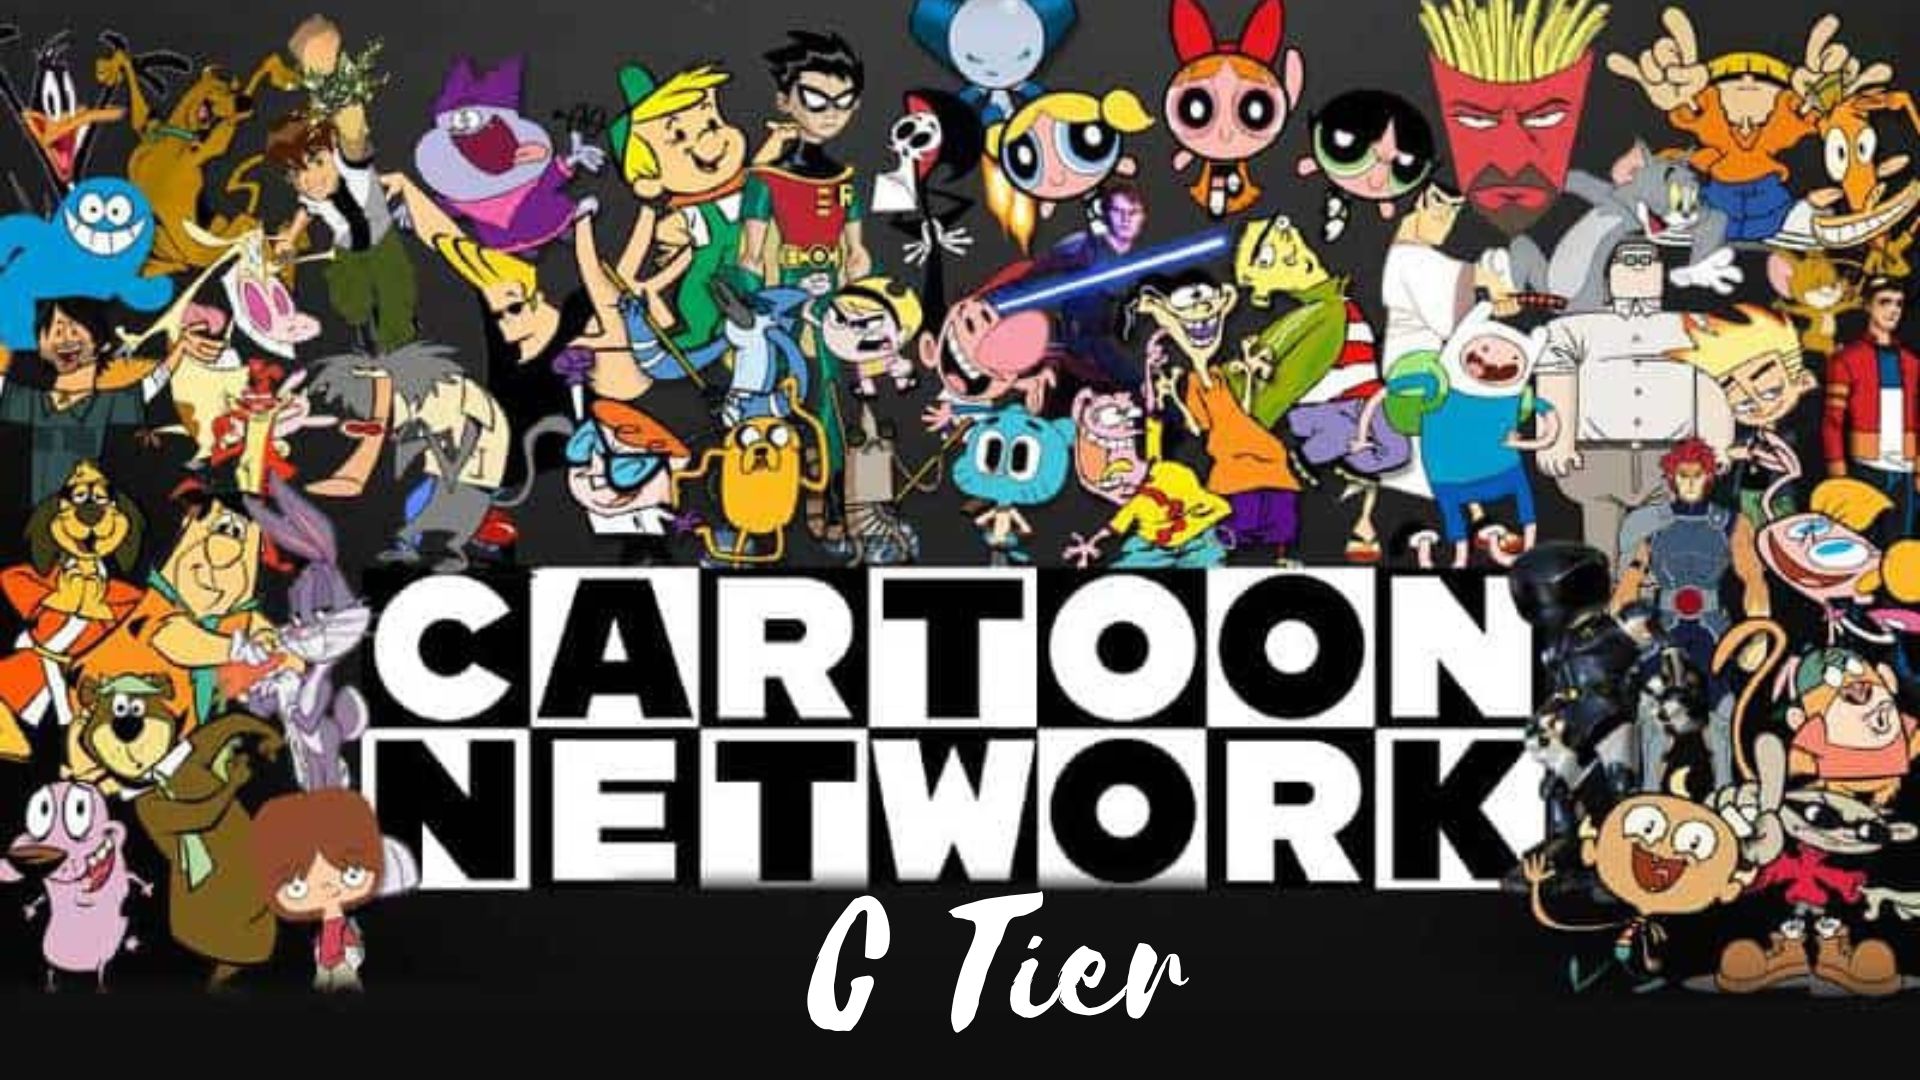 bad cartoons of cartoon network